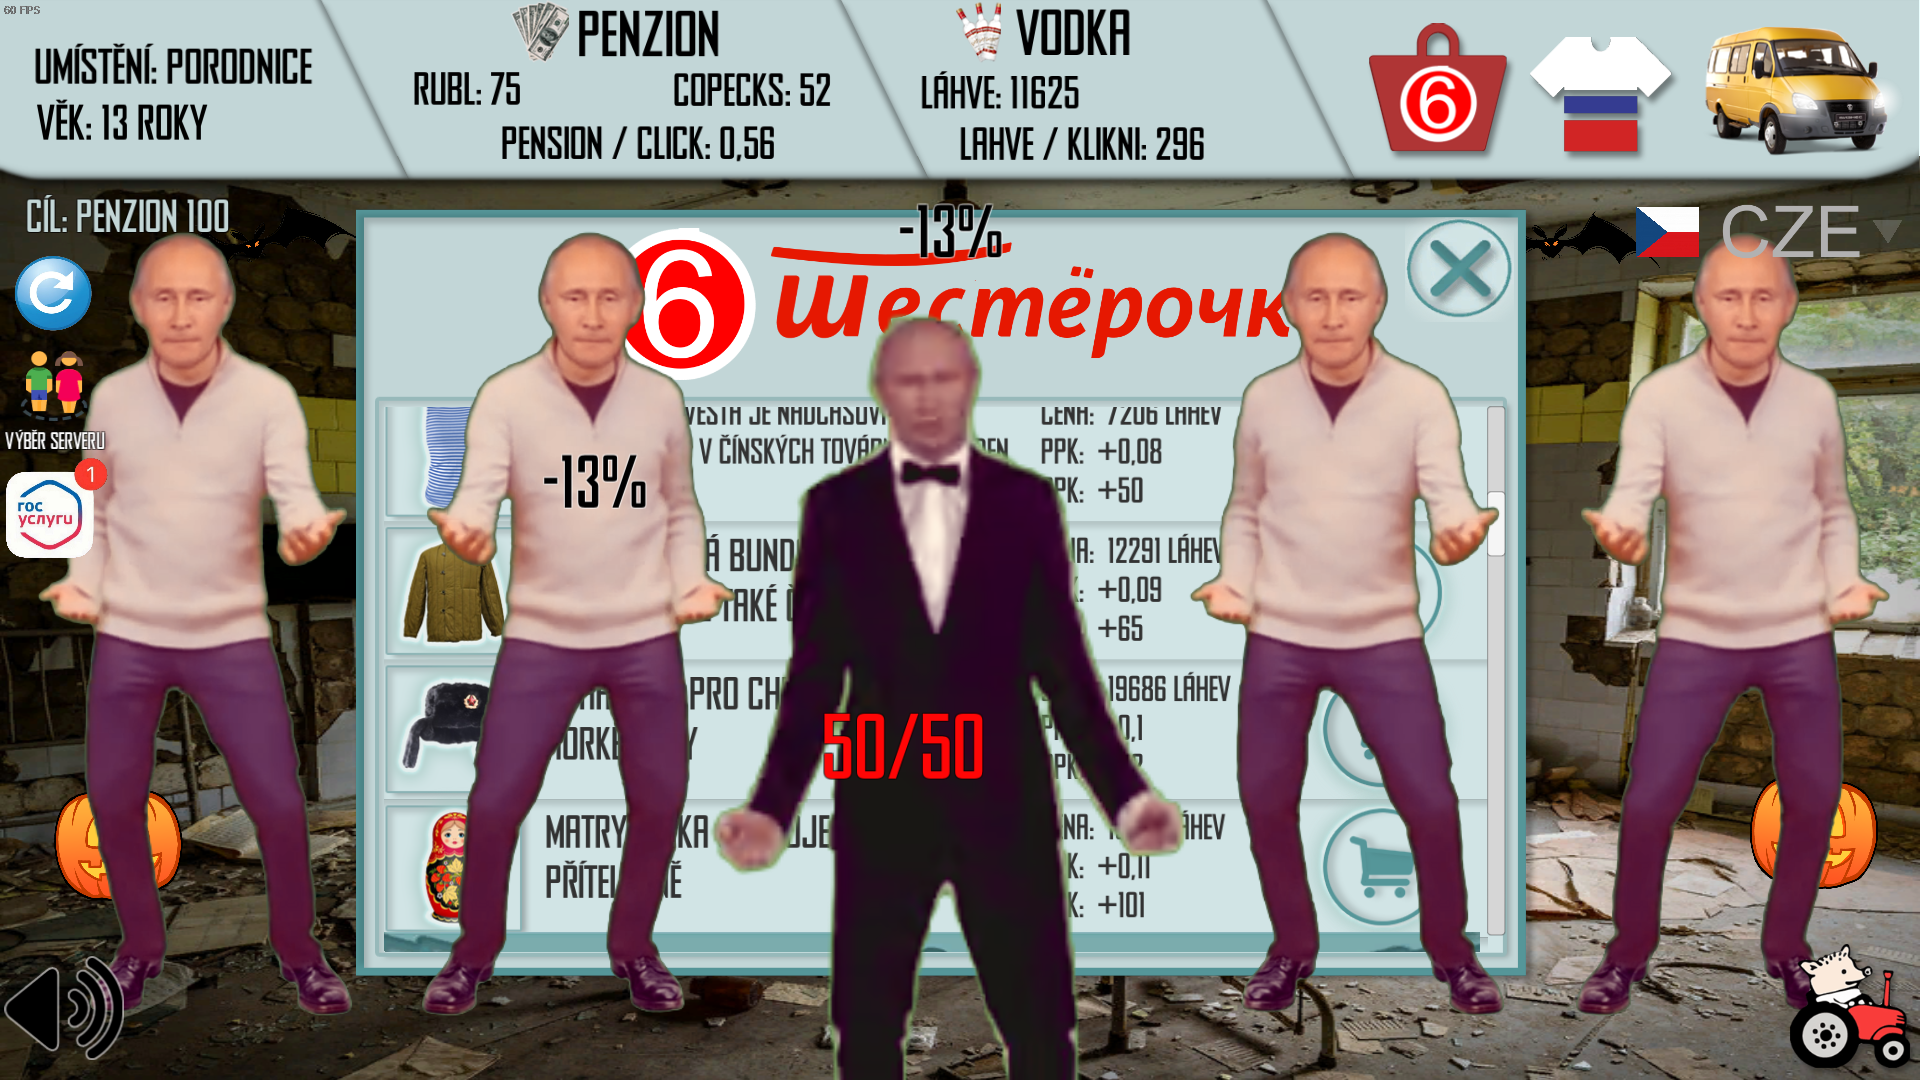 russian life simulator recenze, ruská hra, vodka, putin, bizarní humor